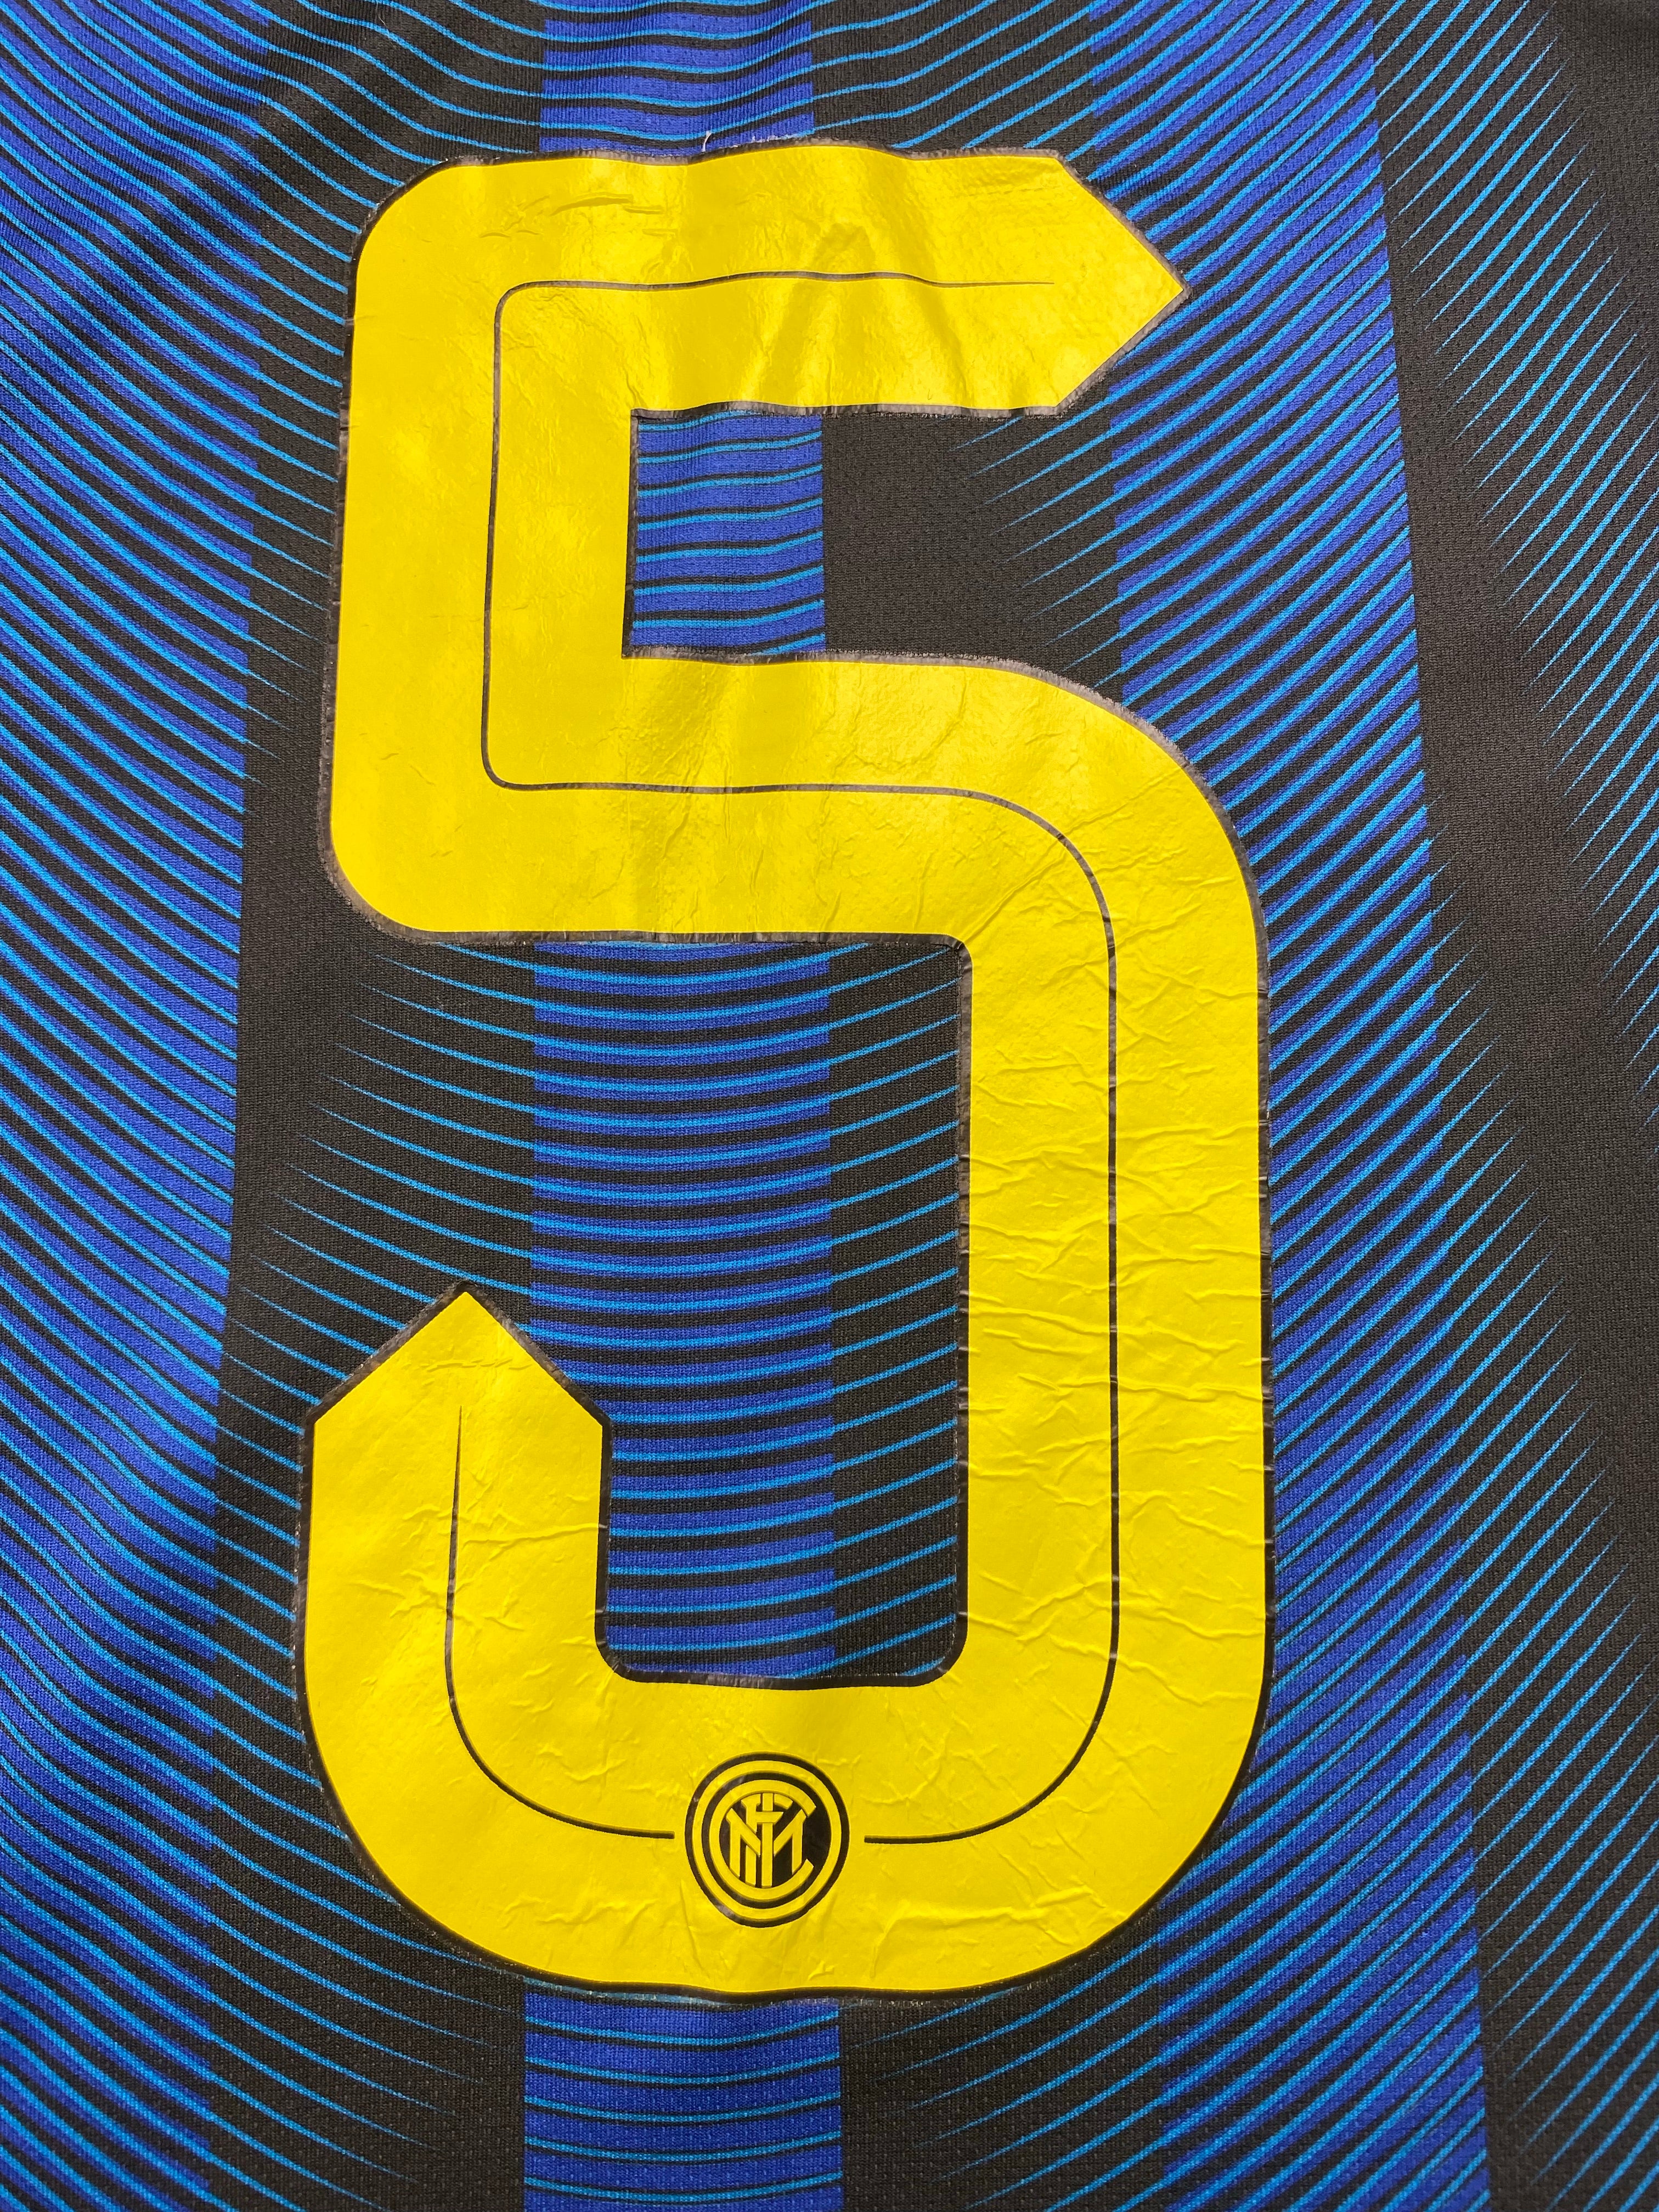 2016/17 Inter Milan Home Shirt Gagliardini #5 (M) 8/10